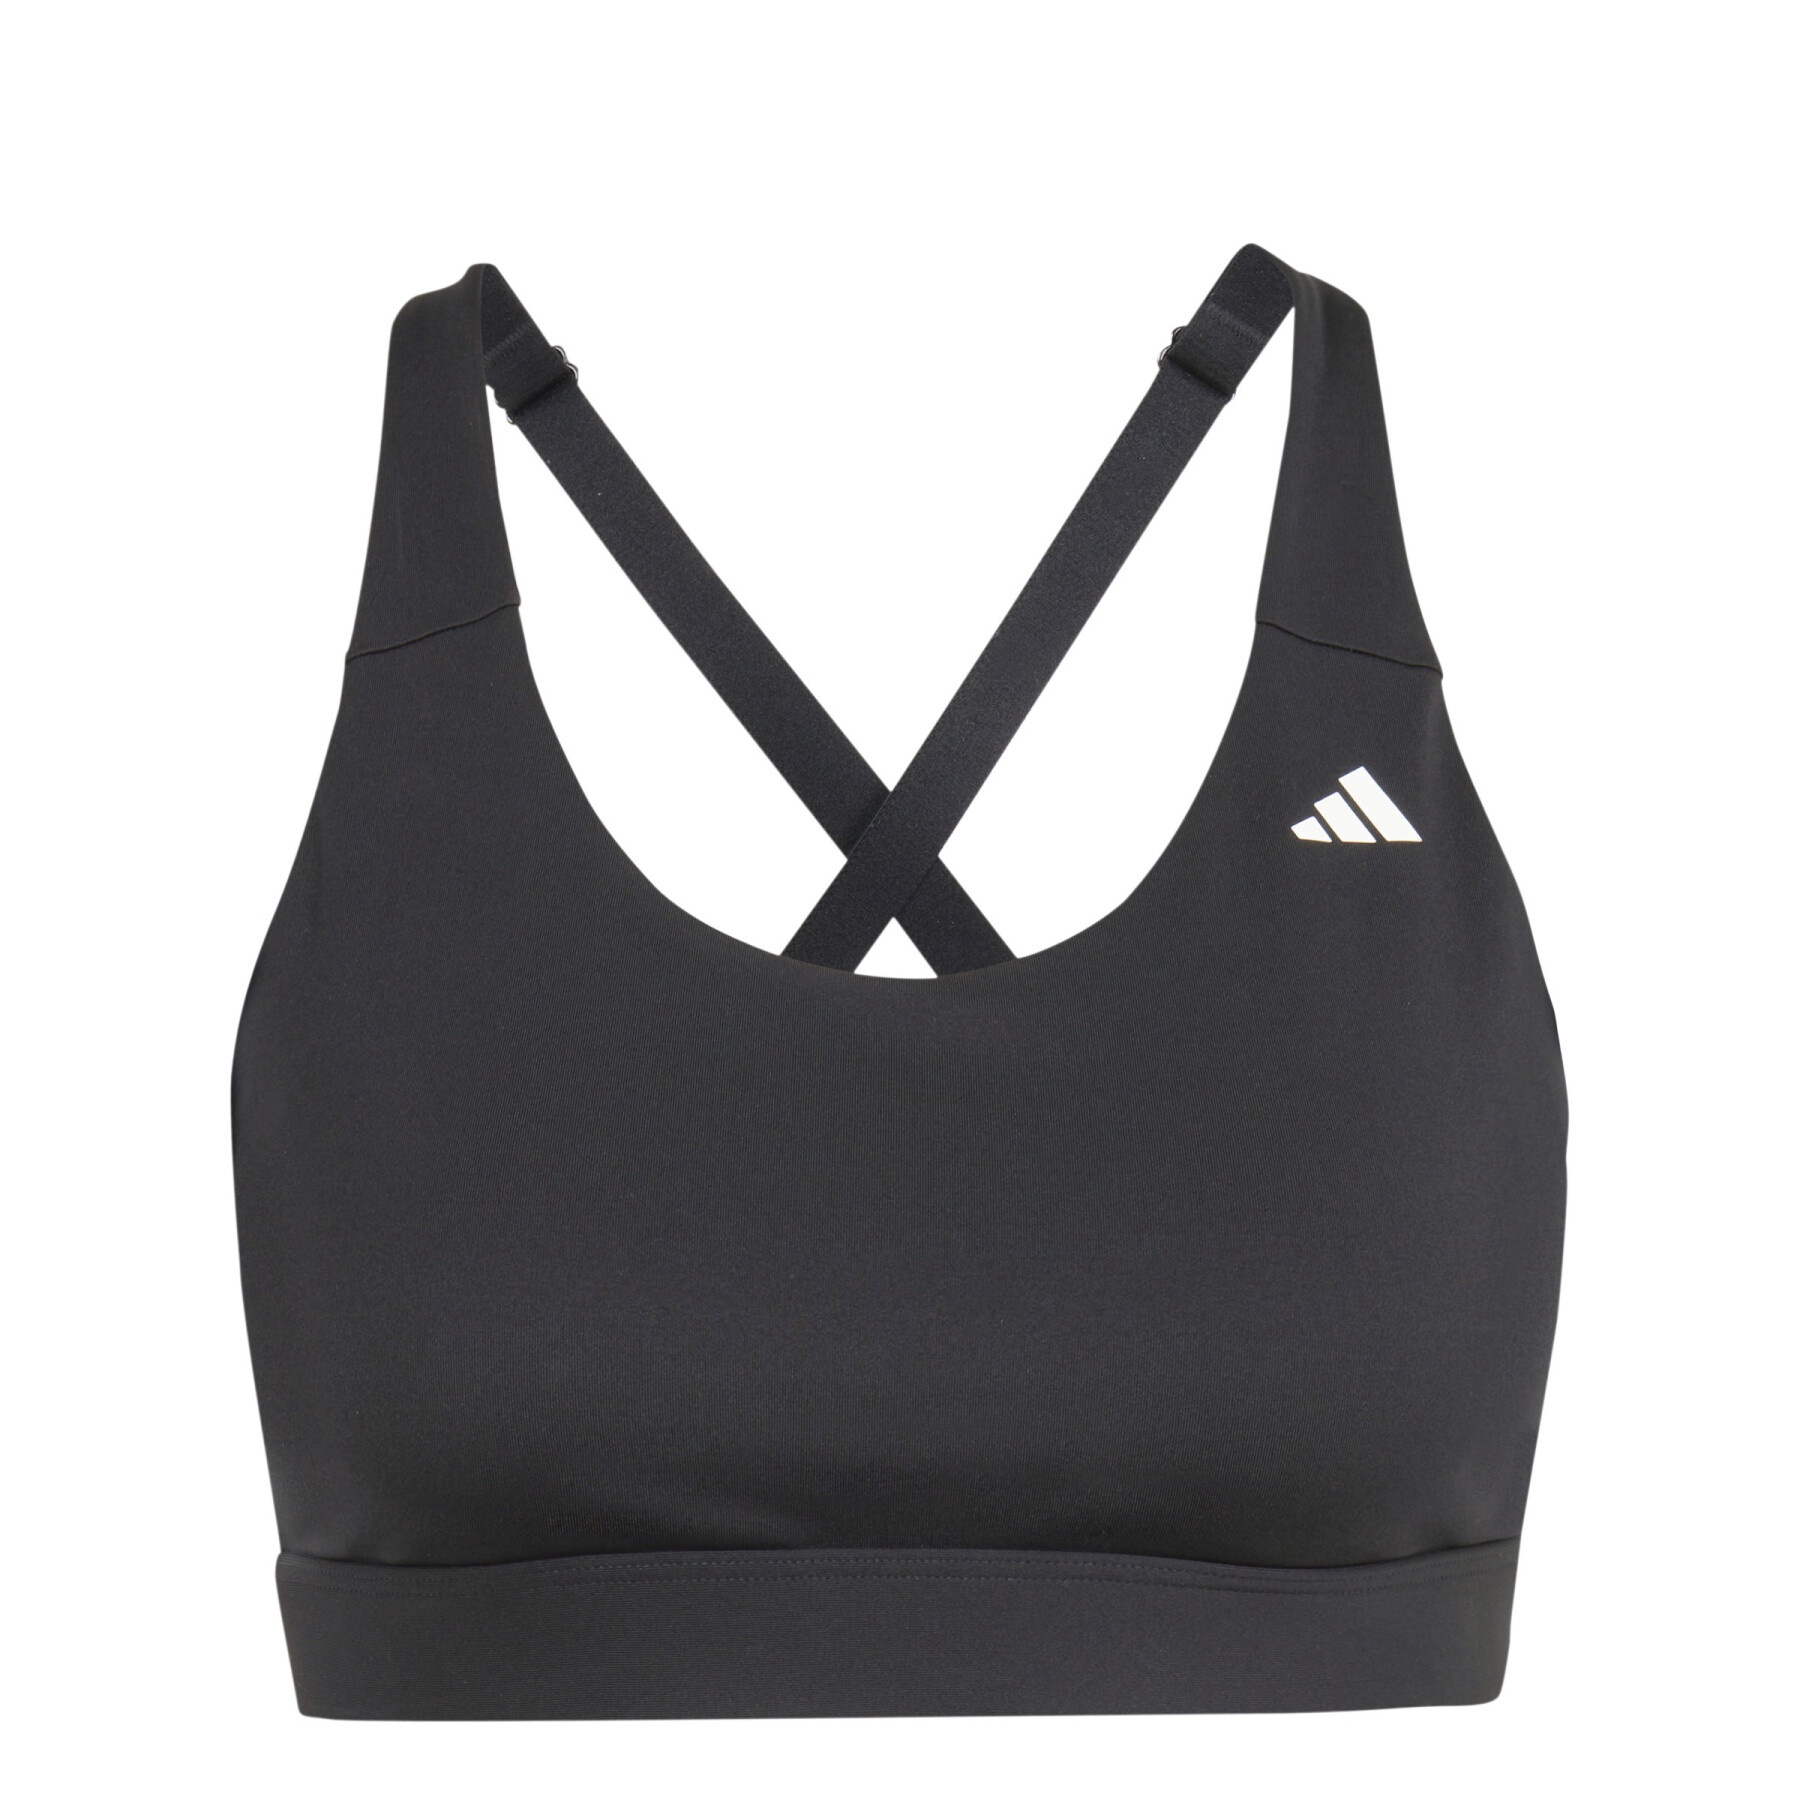 Medium support bra for women adidas Ultimatea Run